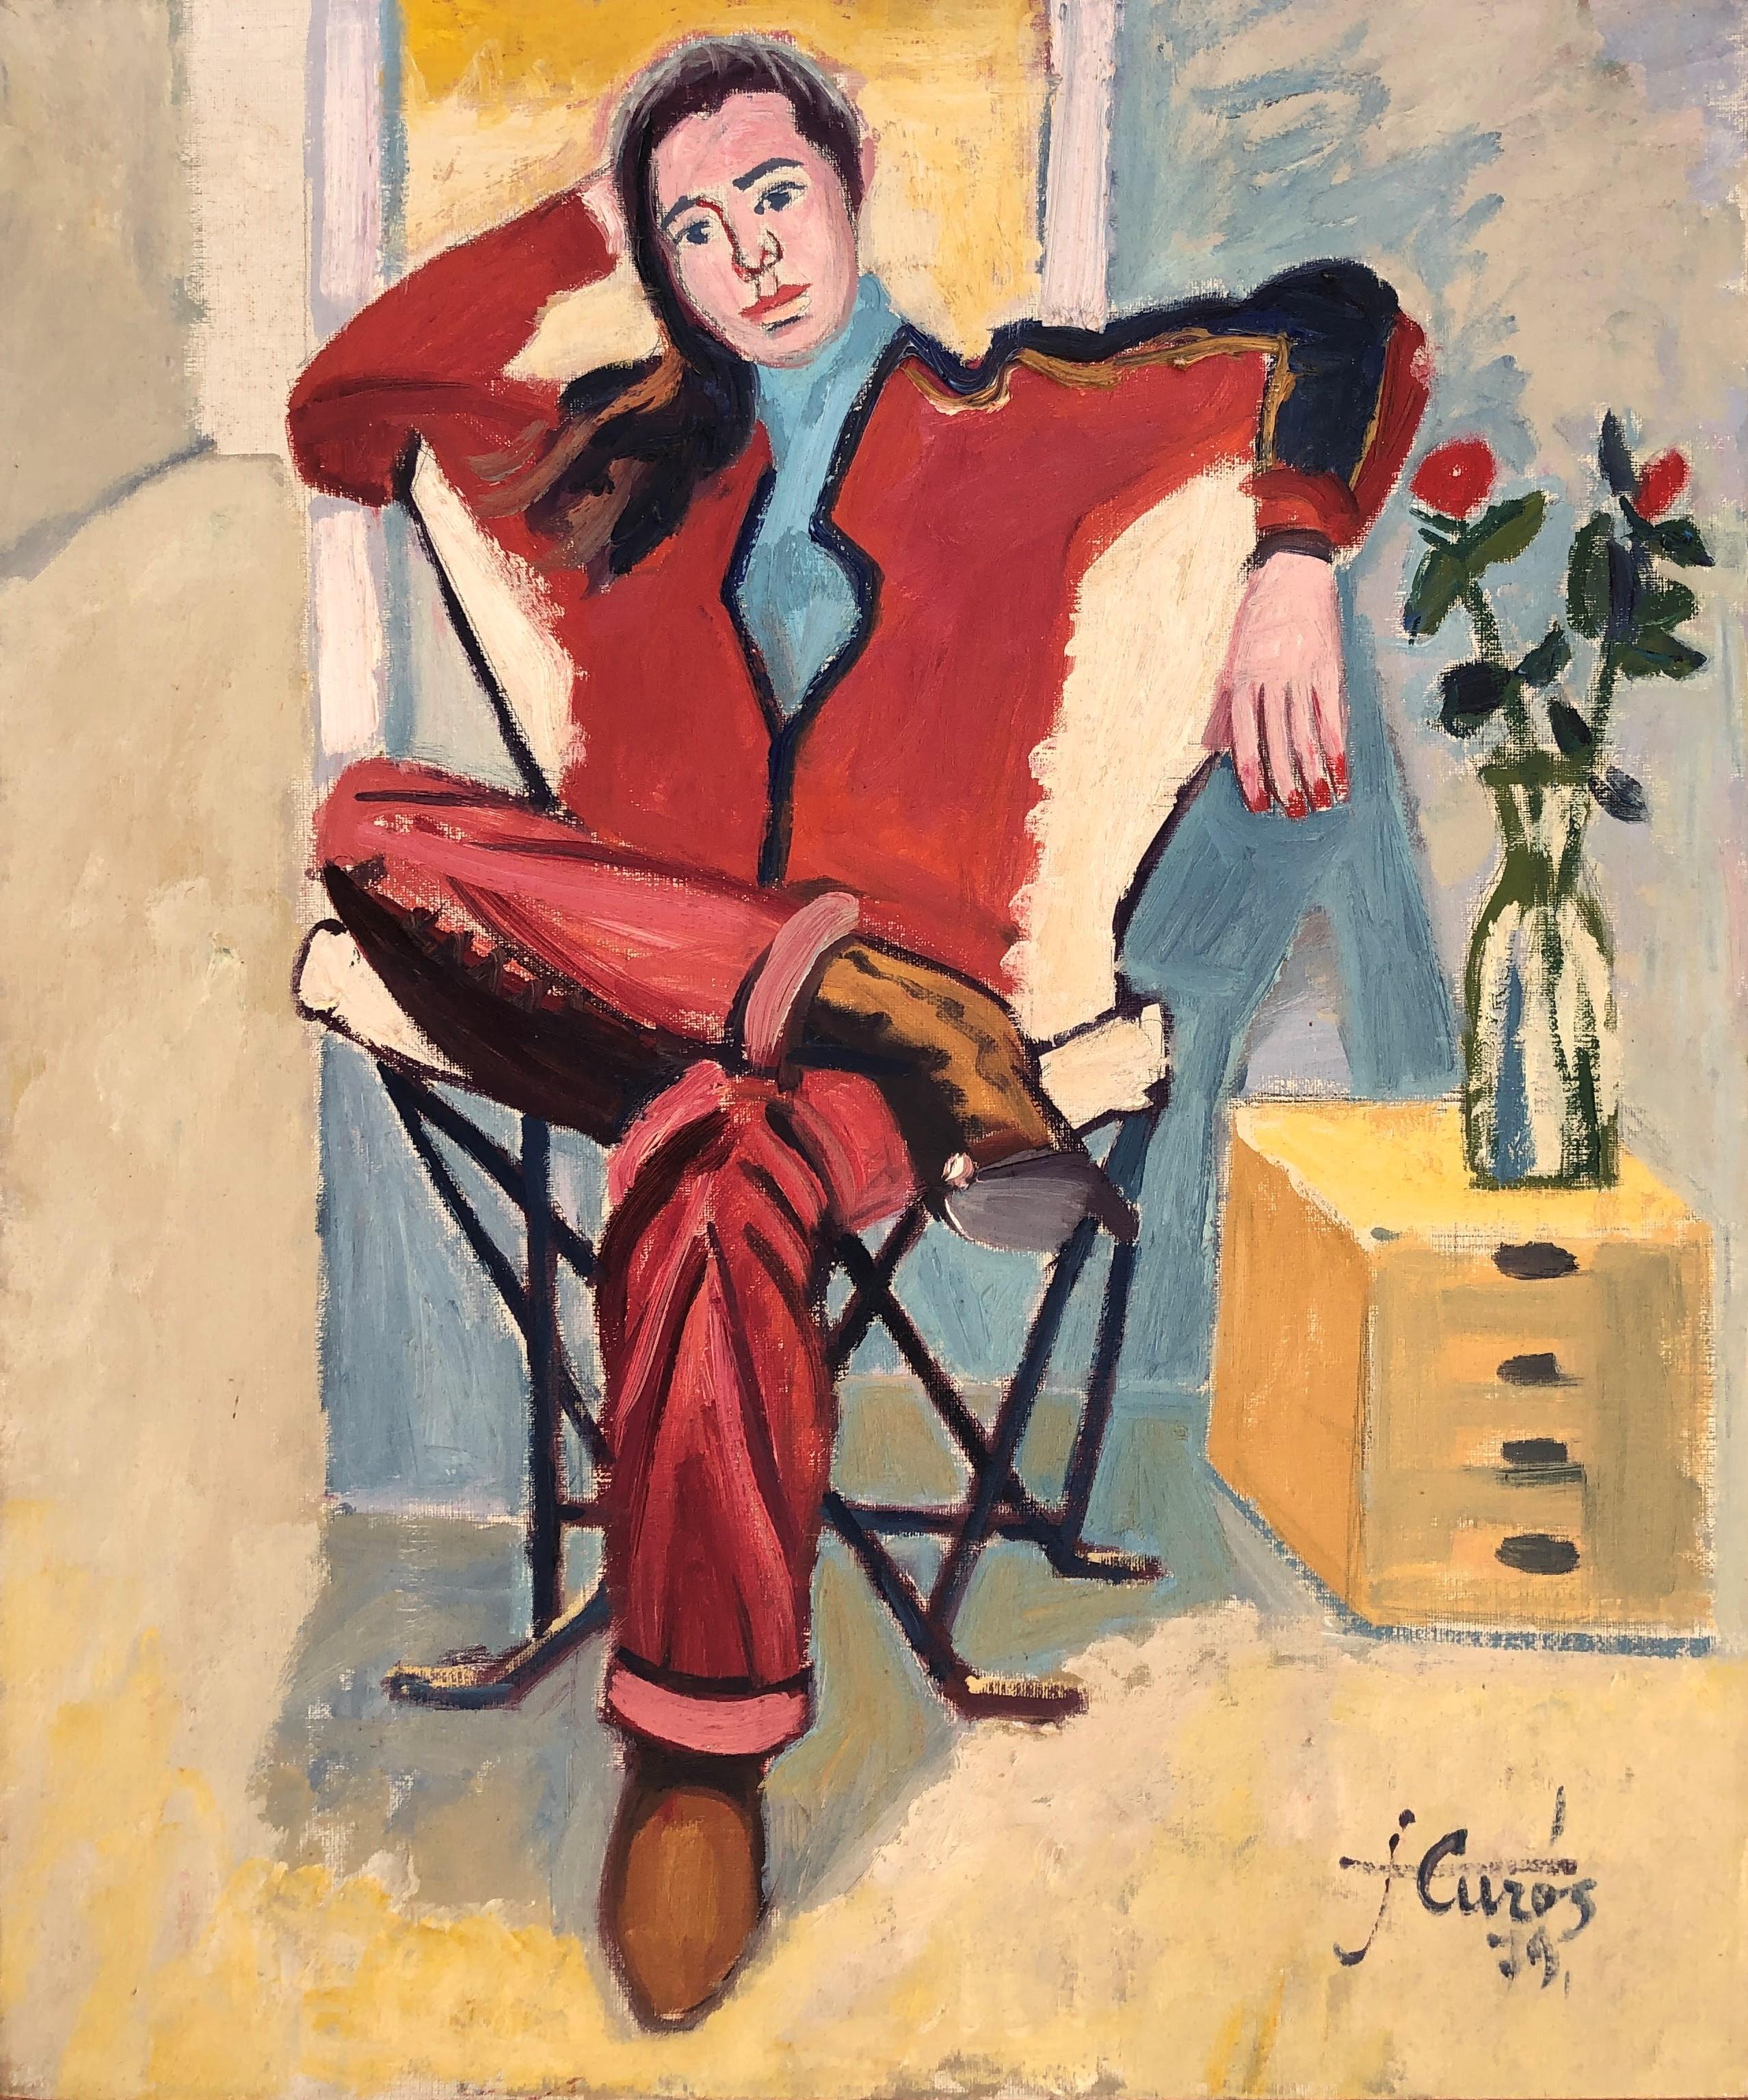 Jordi Curos Ventura Portrait Painting - Sit woman with flowers oil on canvas painting